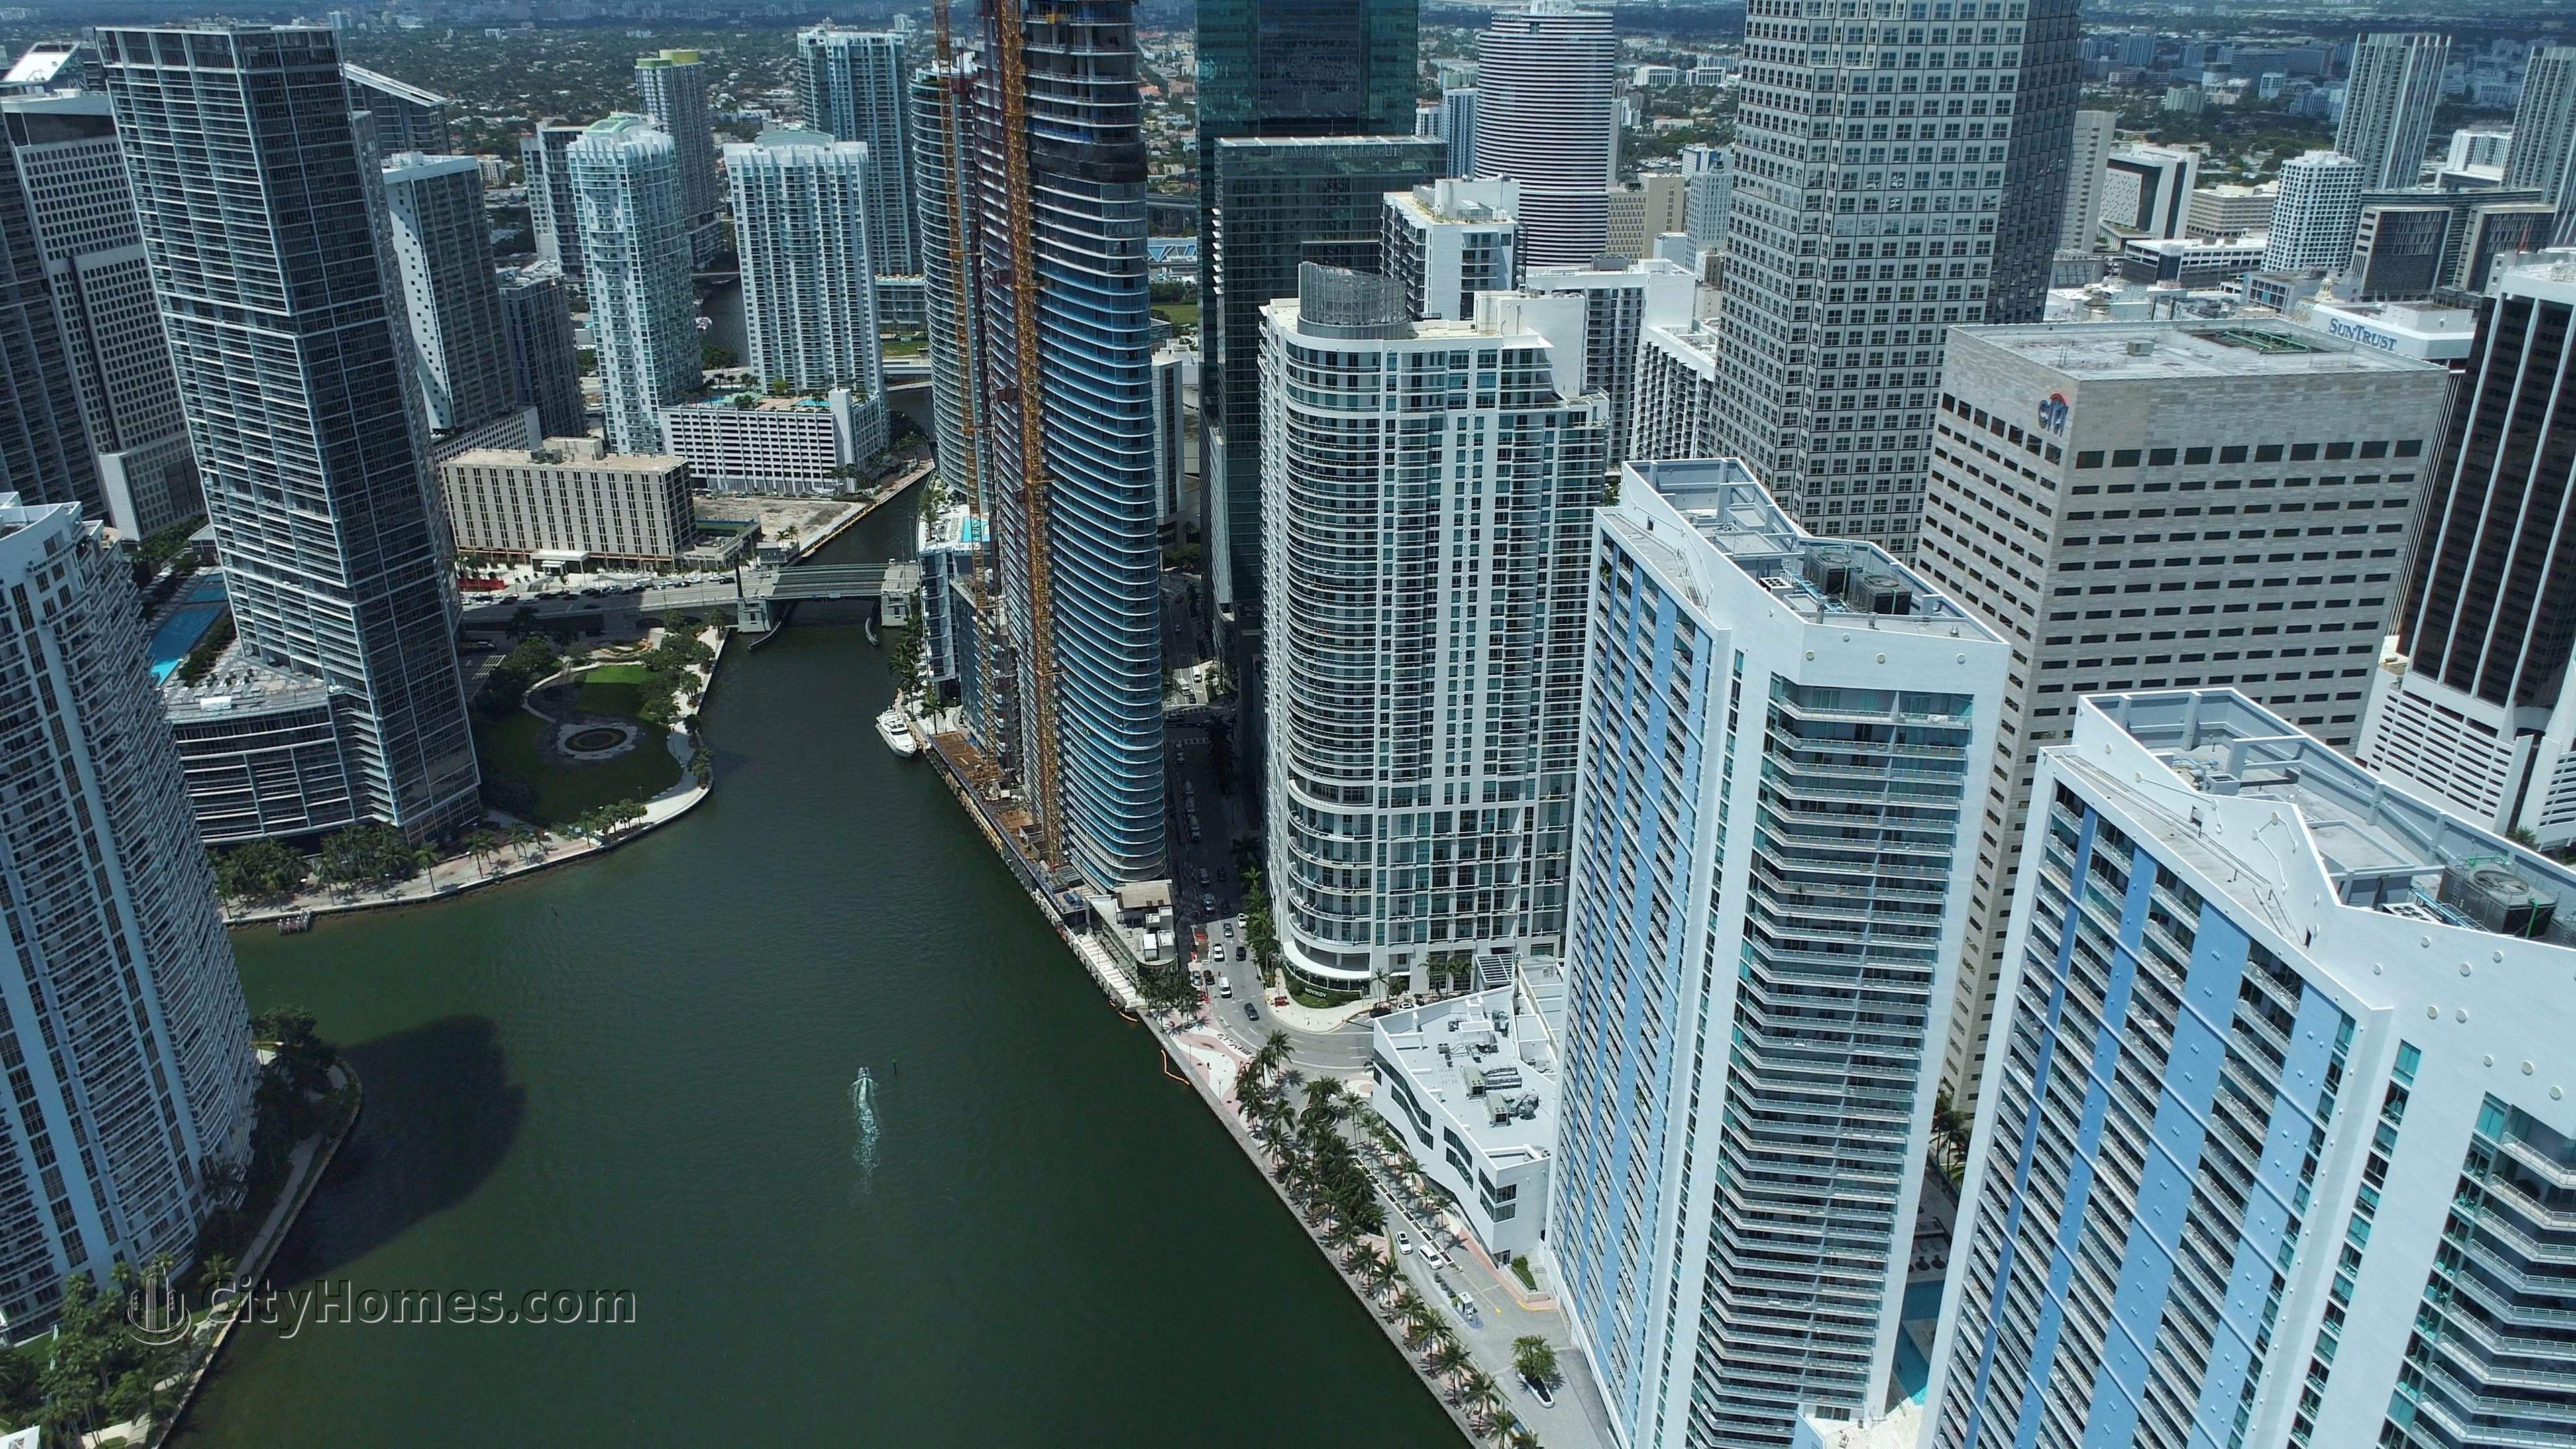 5. One Miami建于 325 And 335 S Biscayne Blvd, 迈阿密, FL 33131